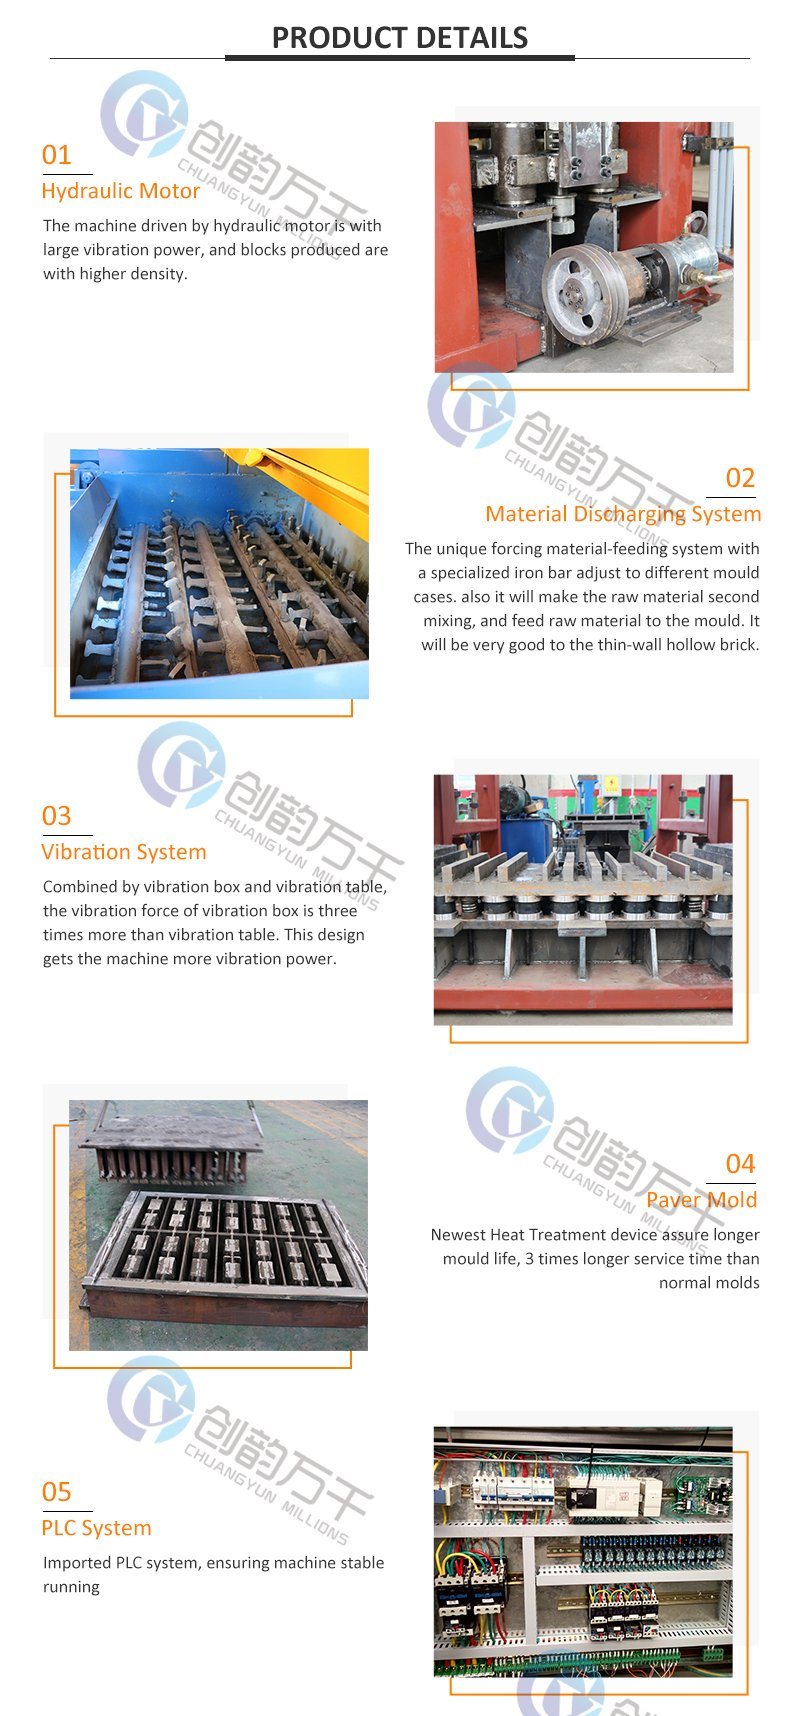 Factory Price Qt 4-15 Full Automatic Brick Making Concrete Block Machine